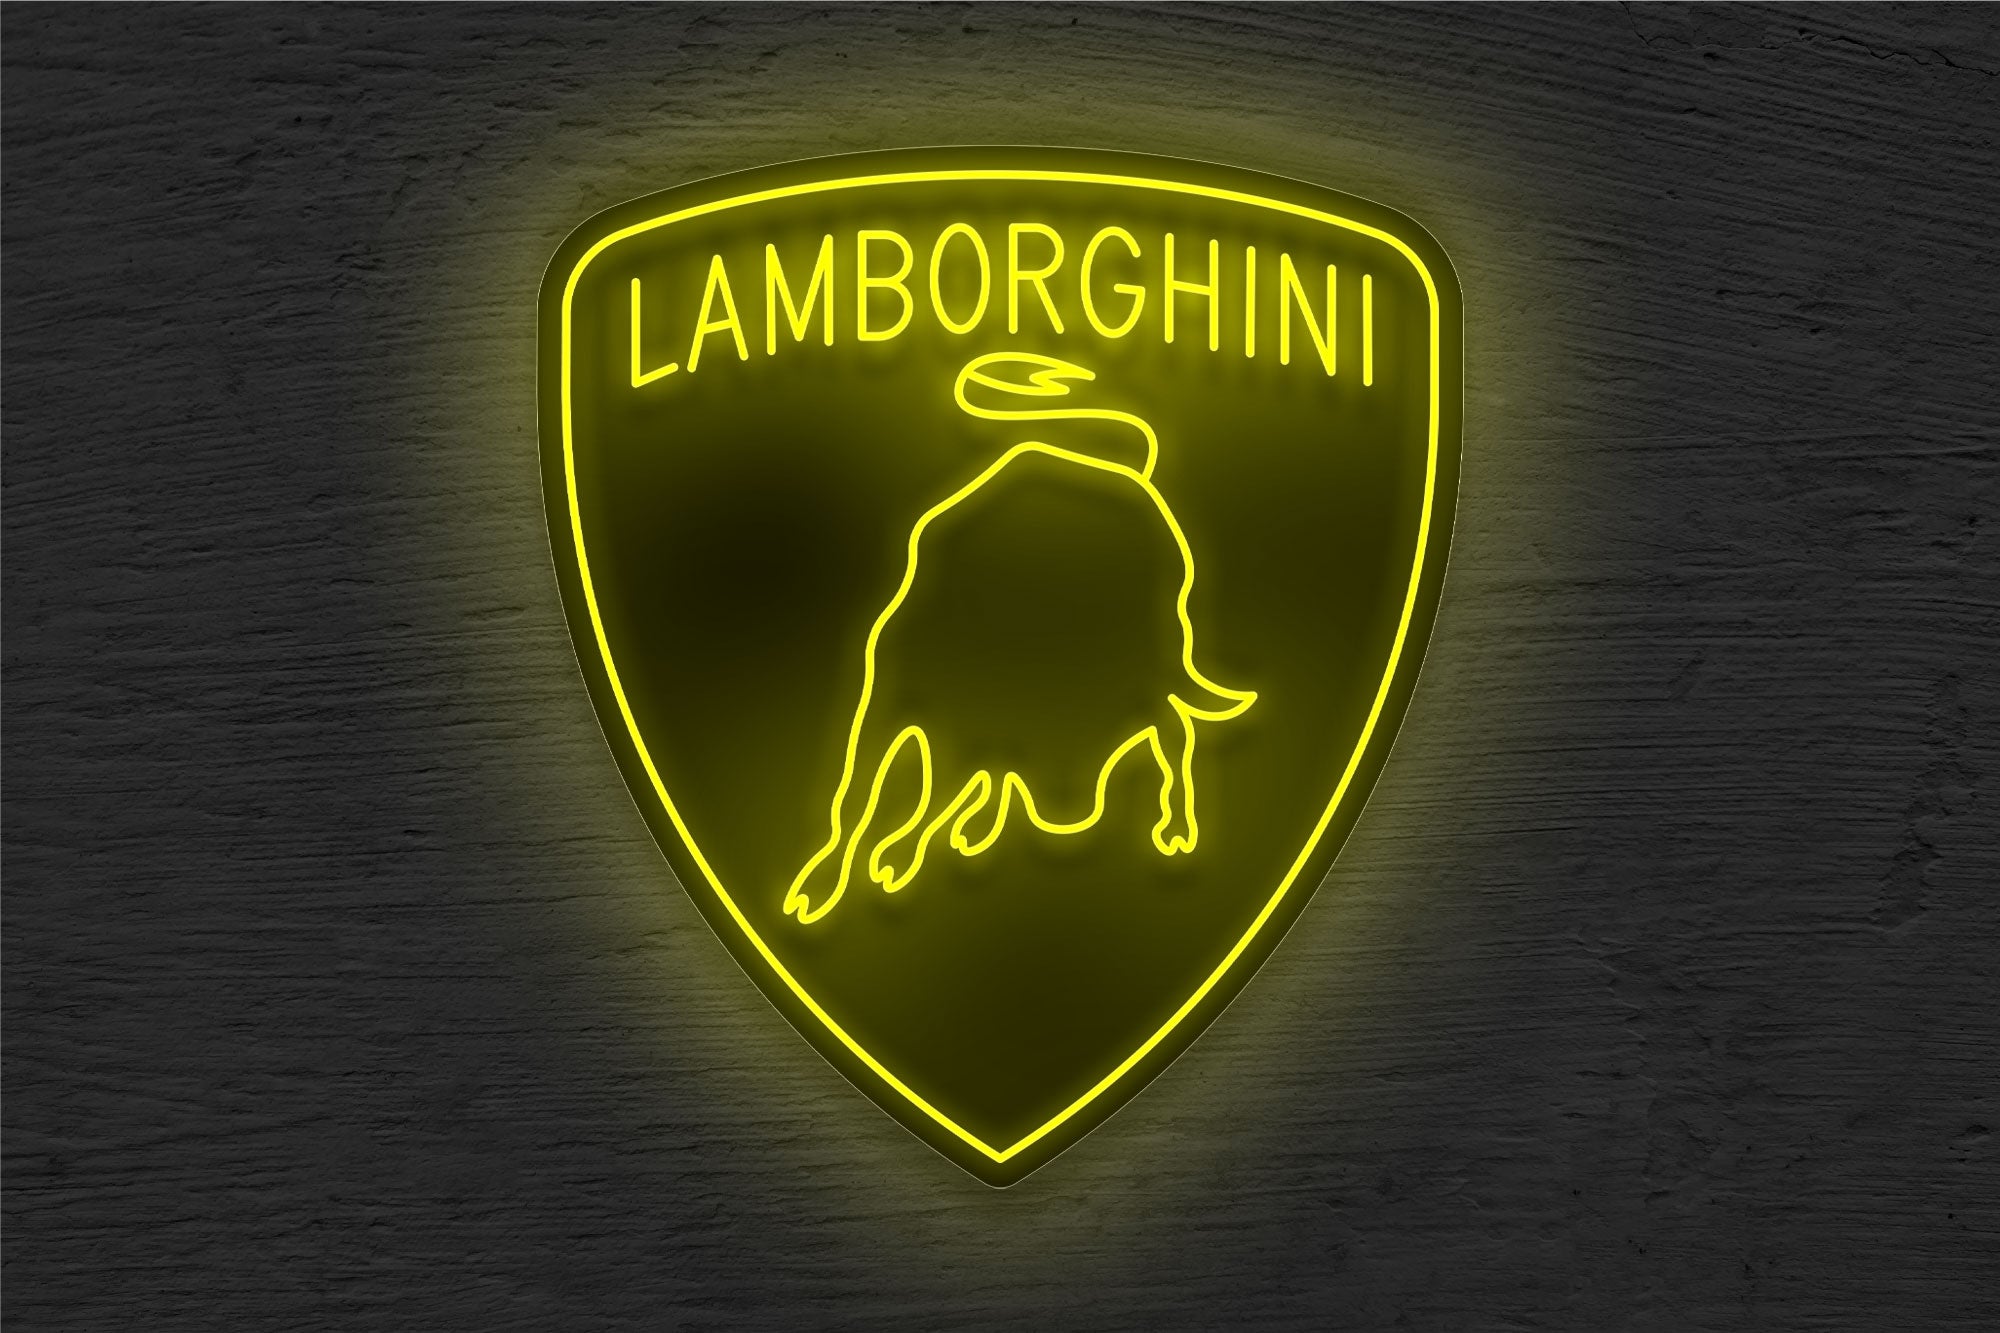 Lamborghini Logo wallpapers | Wallpapers, Backgrounds, Images, Art Photos.  | Lamborghini logo, Lamborghini, Lamborghini cars